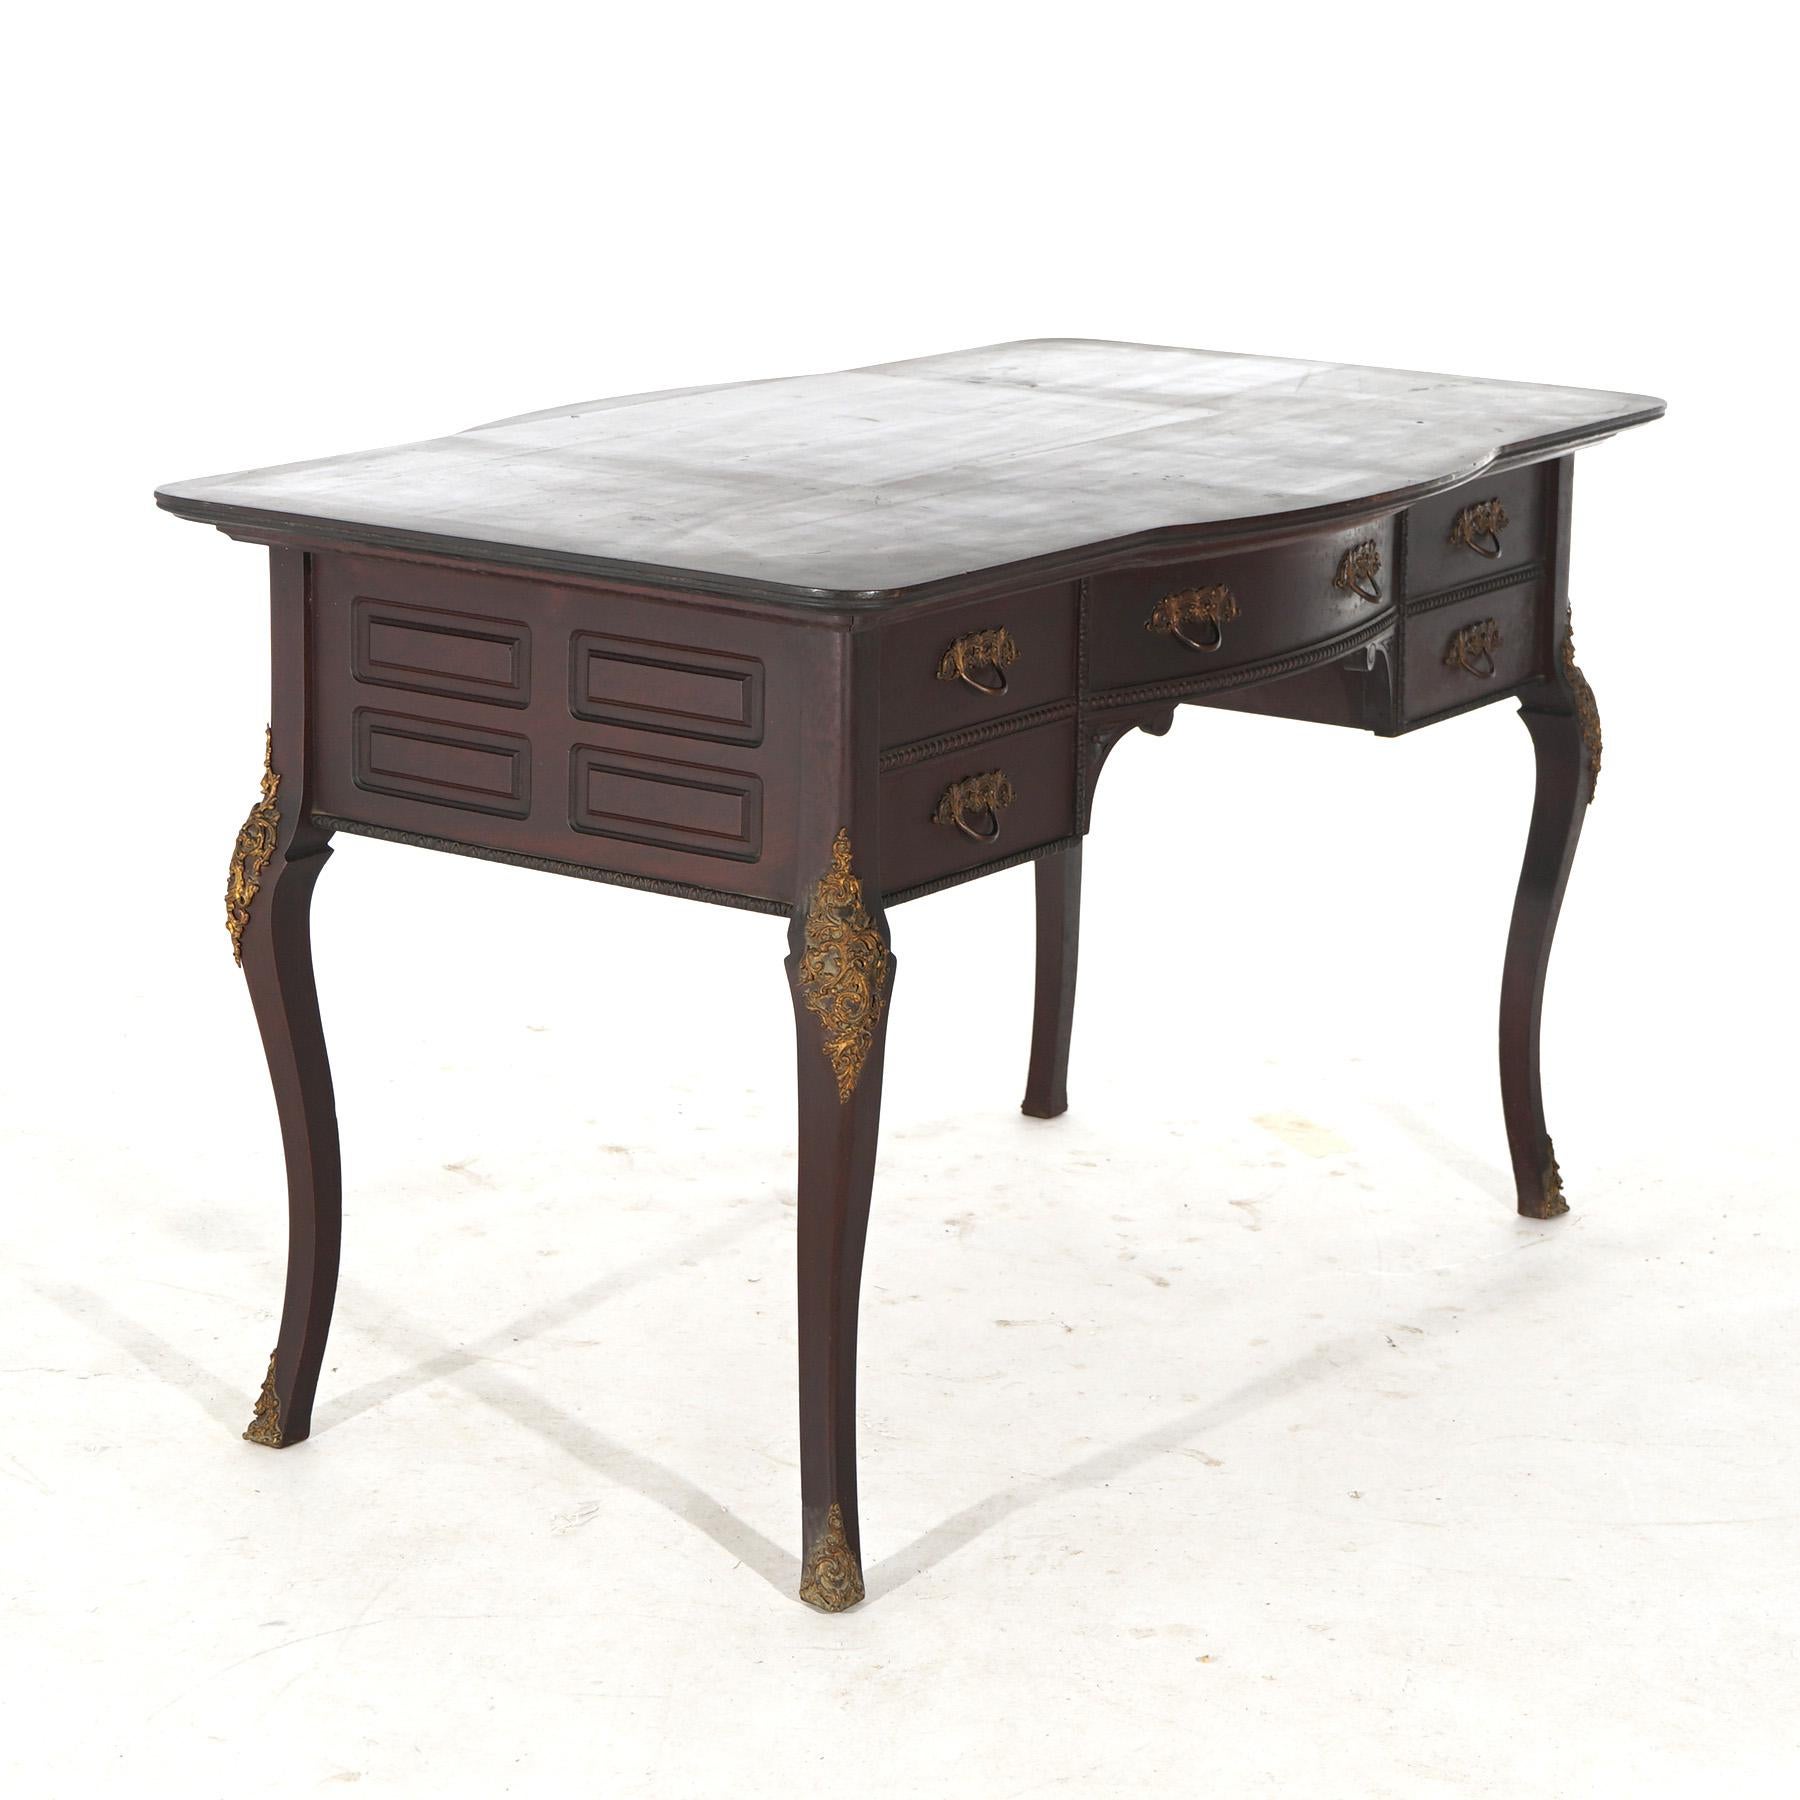 Antique French Mahogany & Ormolu Bureau Plat Writing Desk C1910 For Sale 11